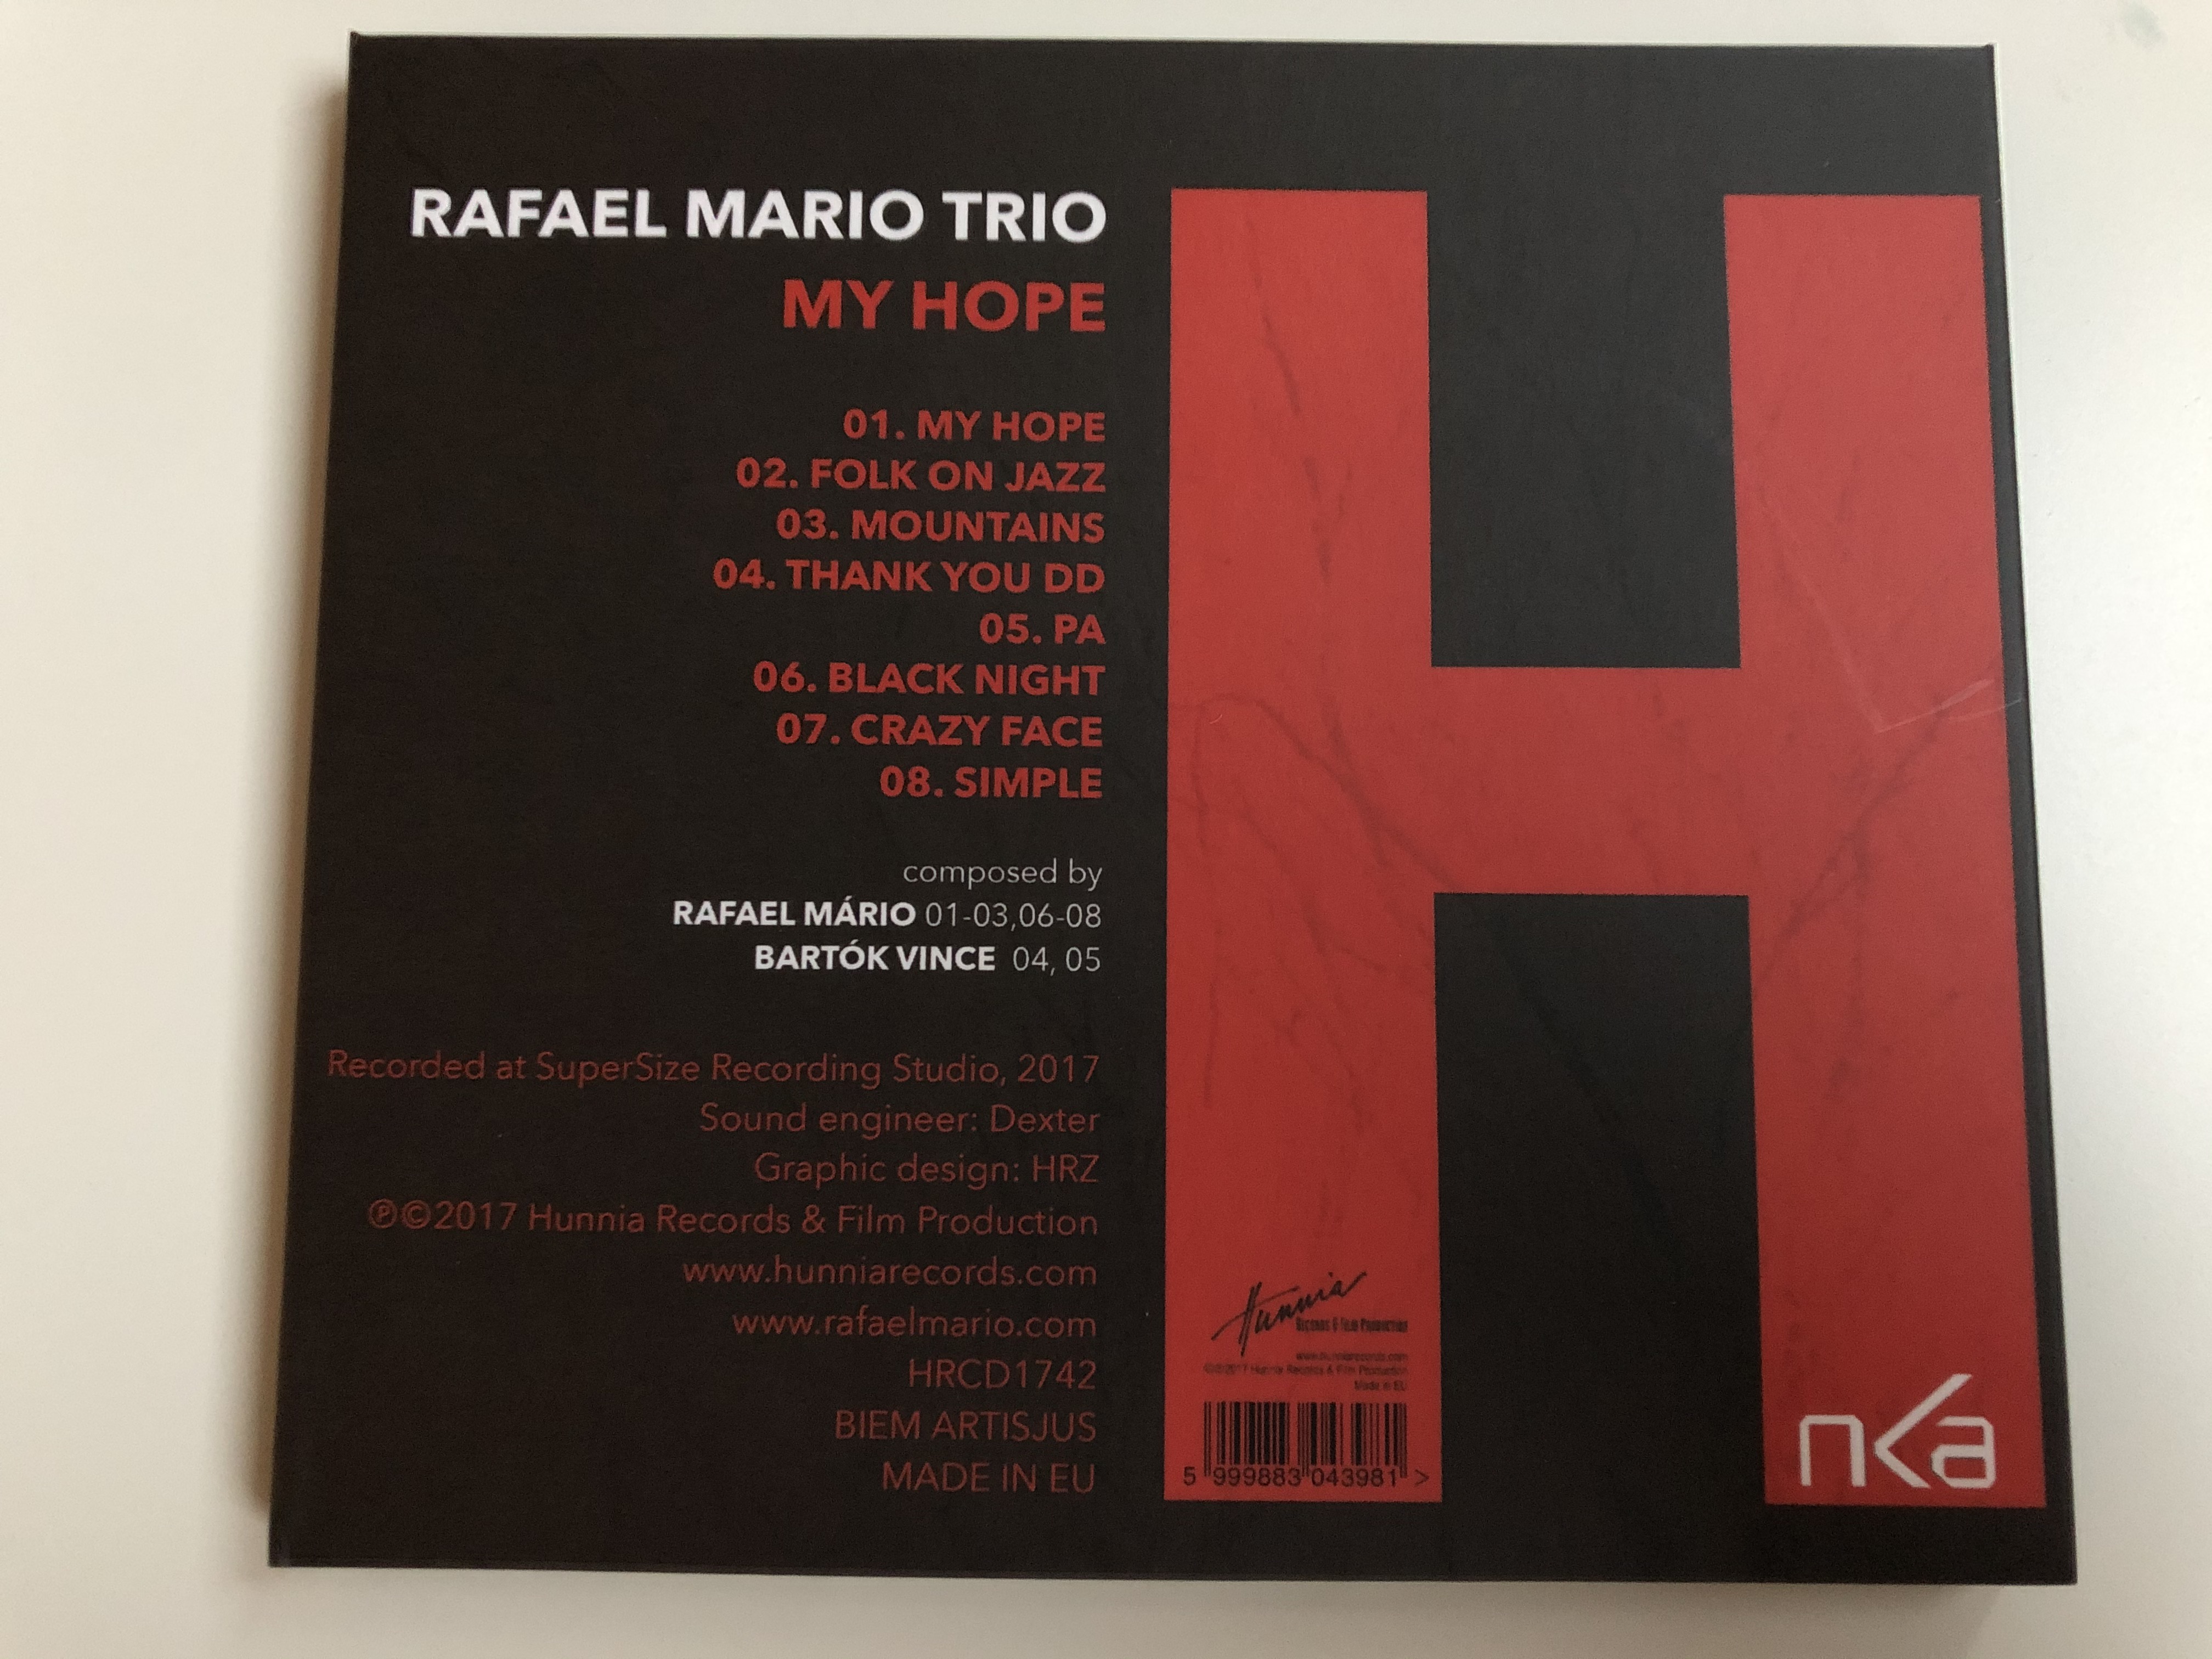 my-hope-rafael-mario-trio-hunnia-records-film-production-audio-cd-2017-hrcd1742-4-.jpg